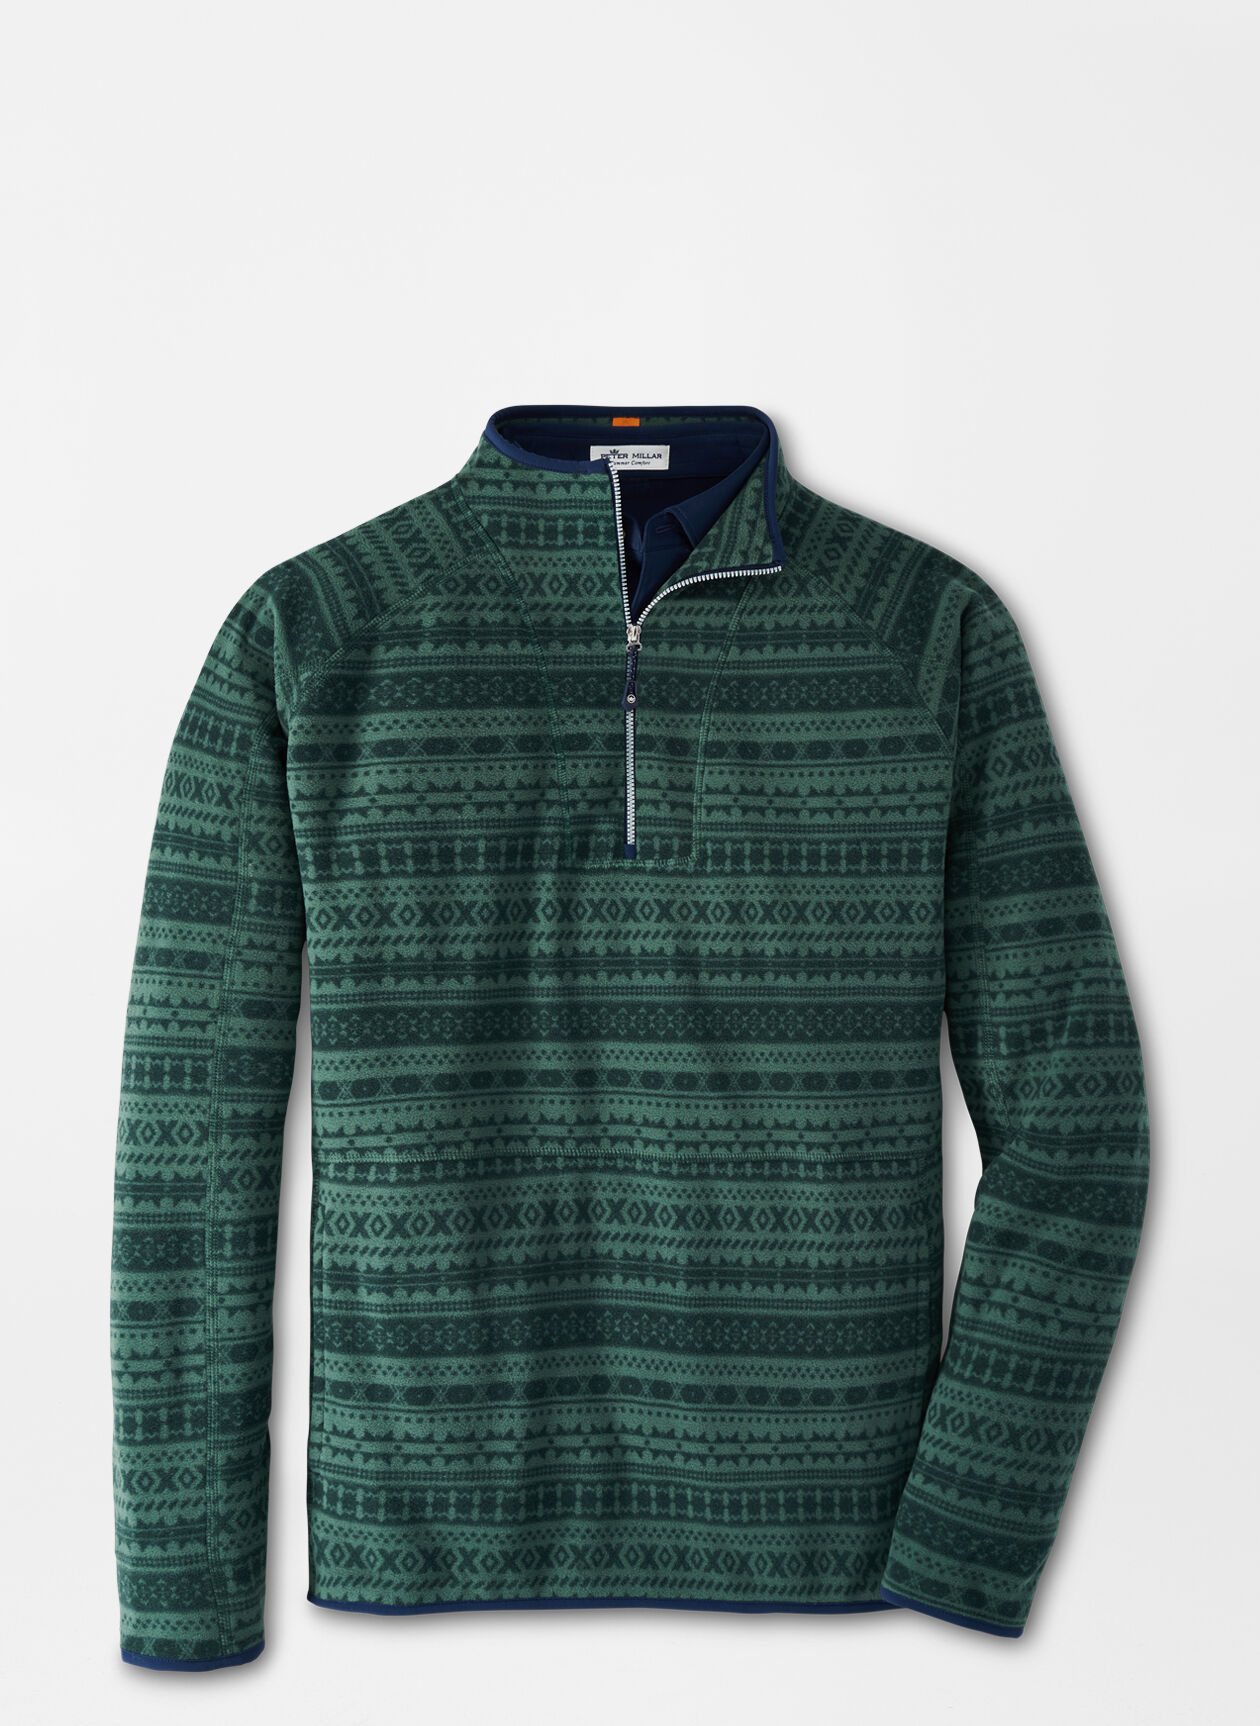 Peter Millar sweater